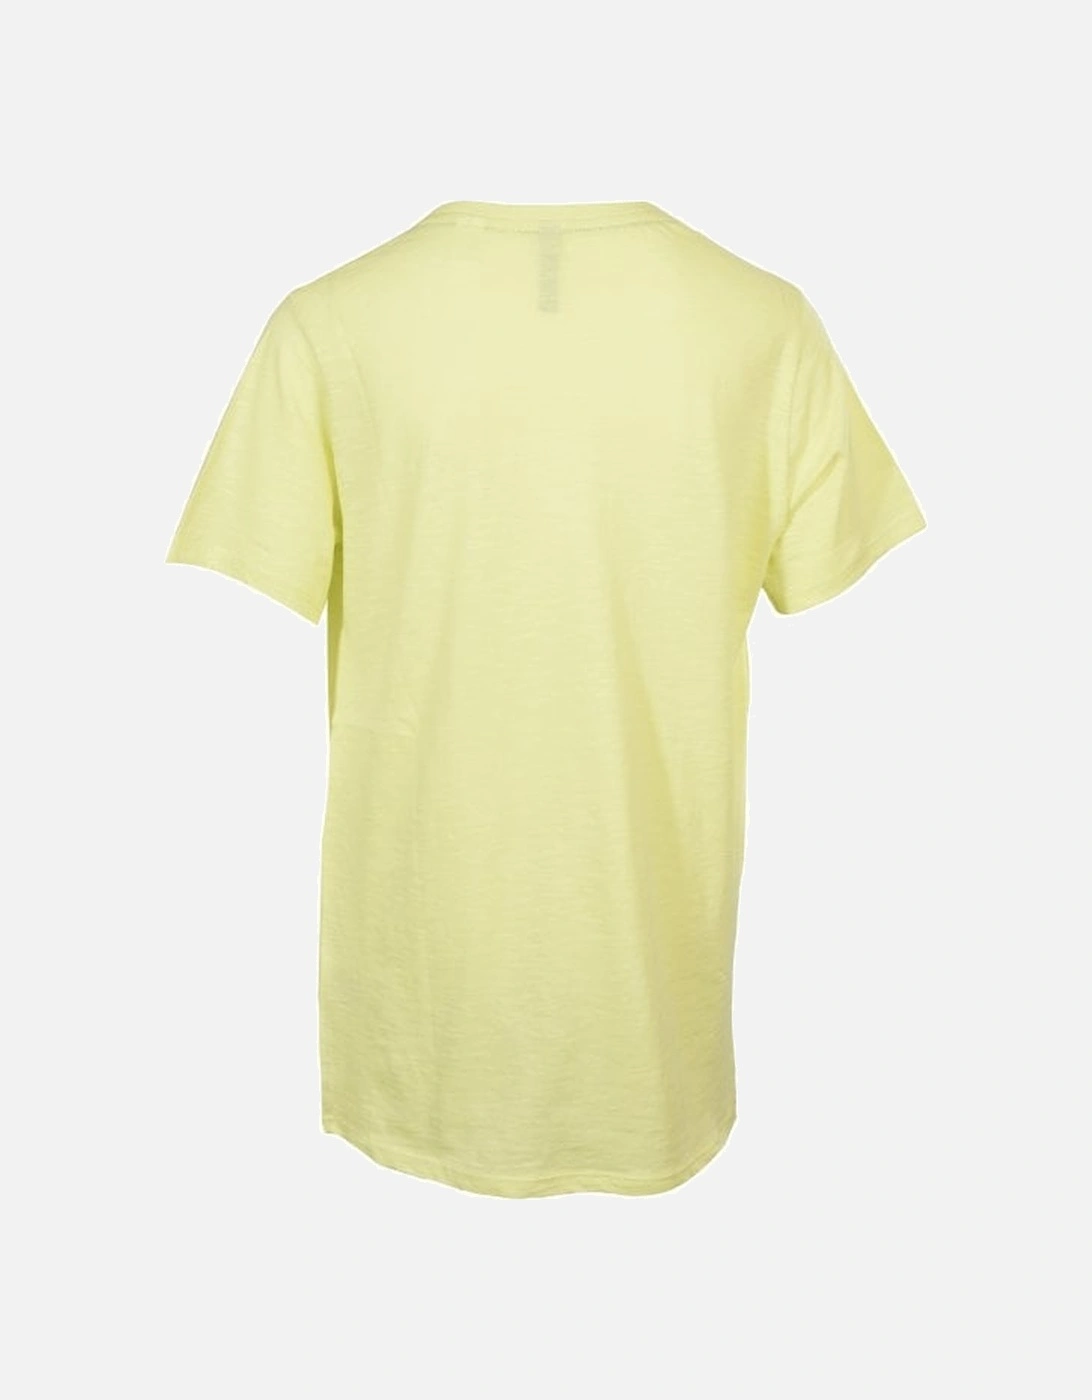 Boys Circle Surfer T-Shirt, Sunny Lime